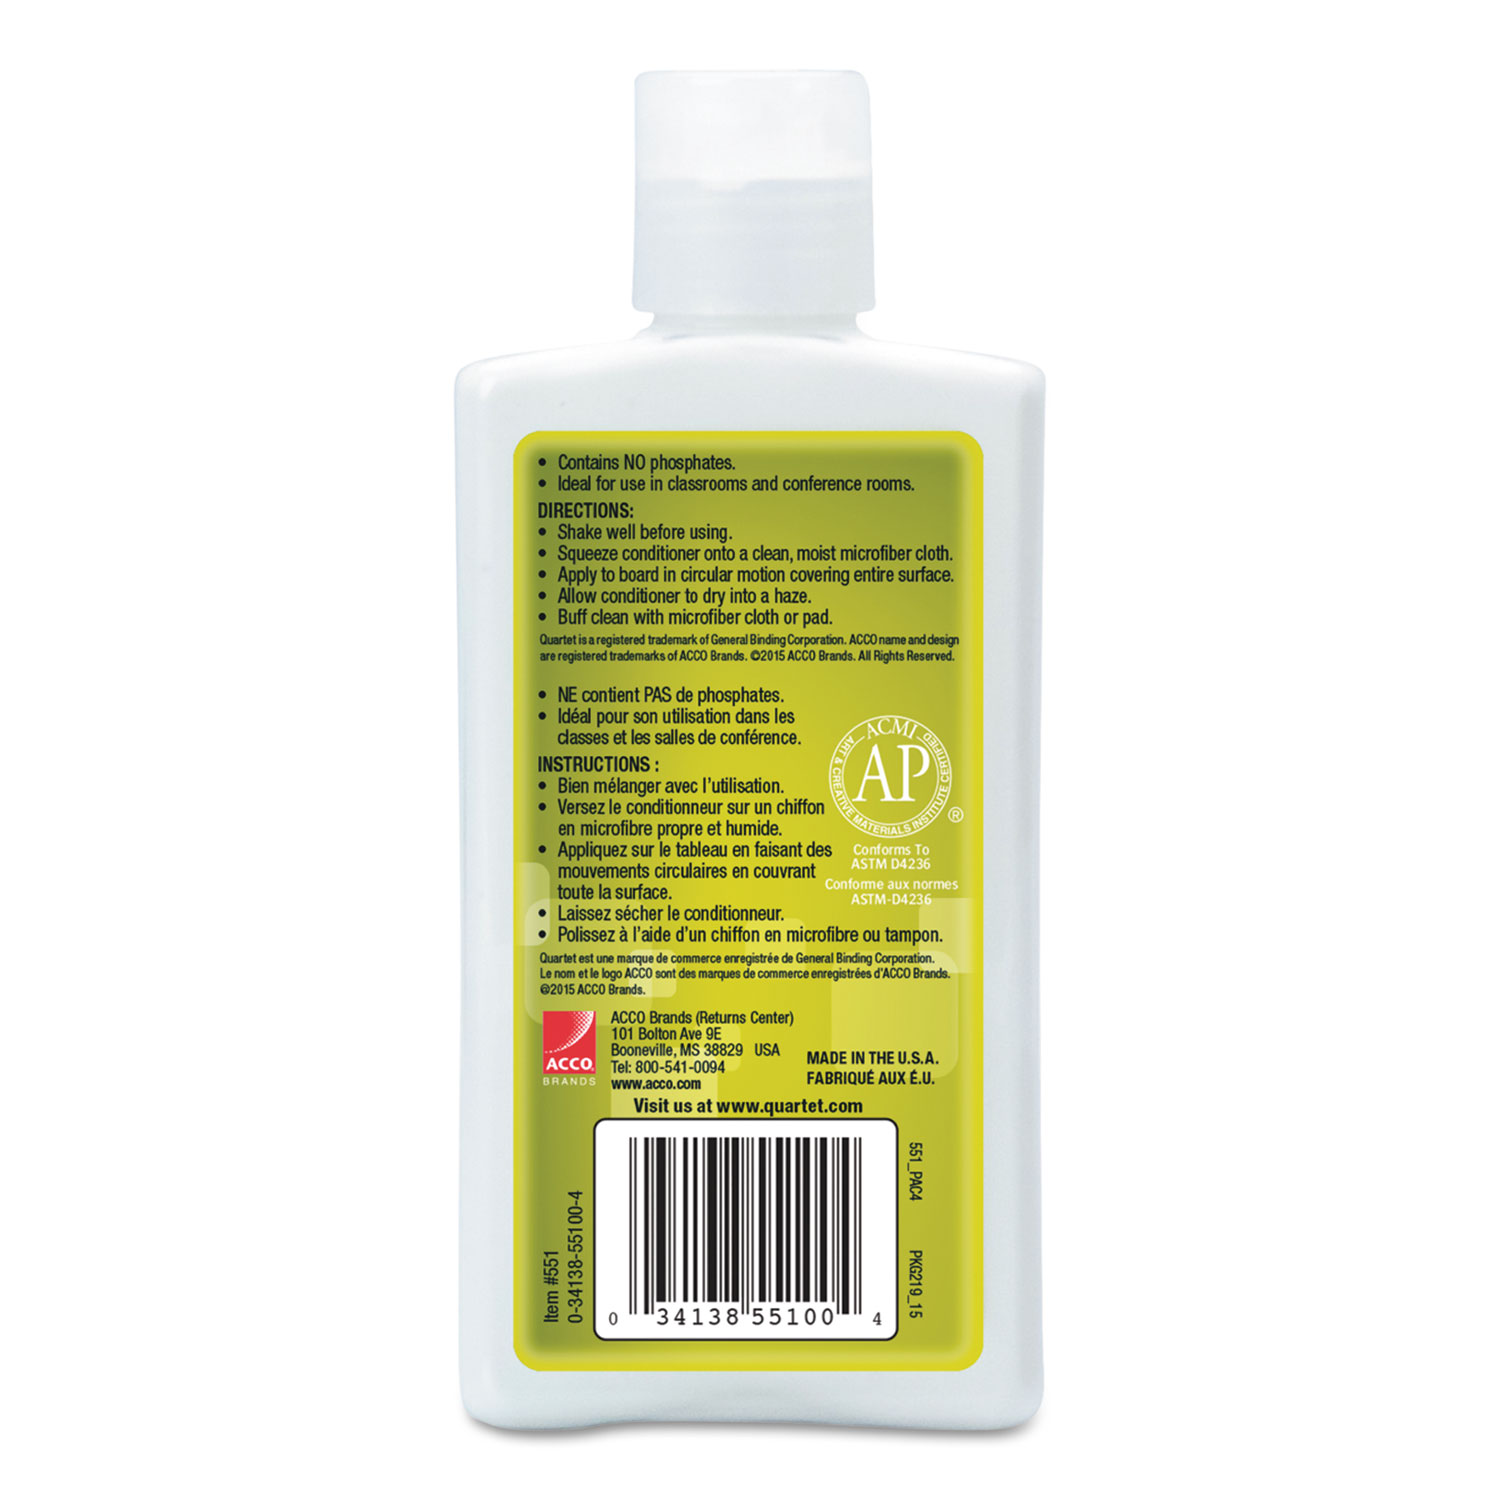 Whiteboard Conditioner/Cleaner for Dry Erase Boards, 8 oz Bottle